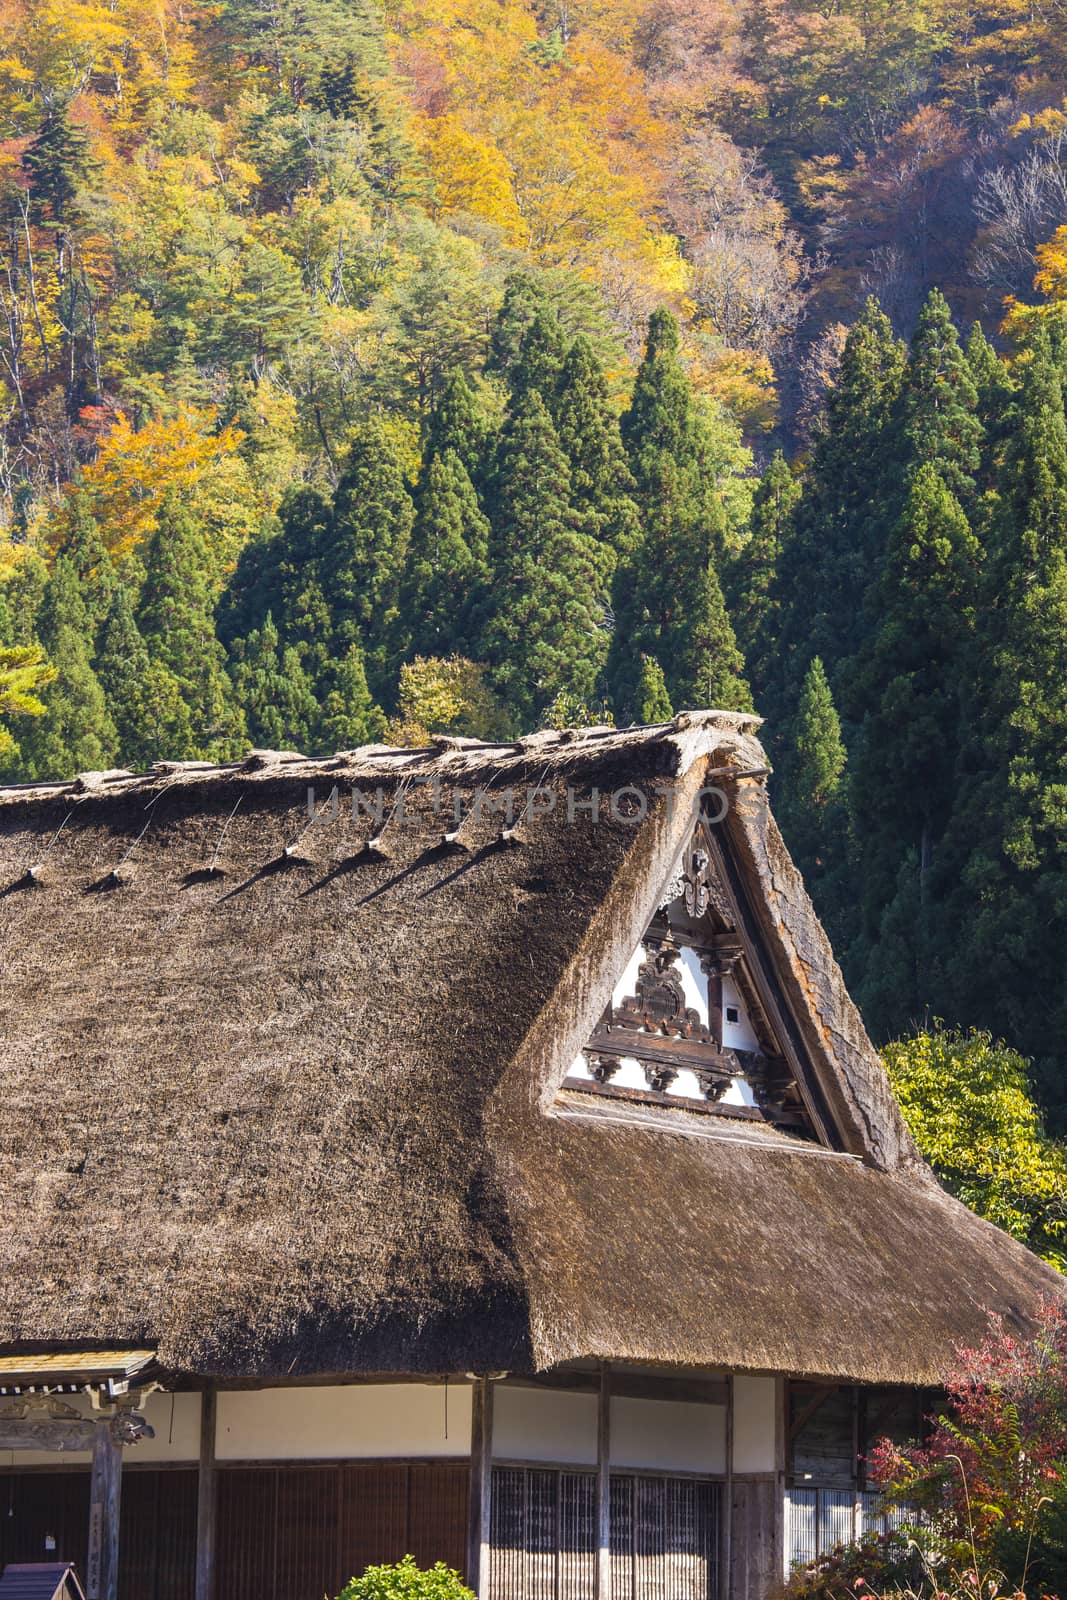 Cottage and rice field in small village shirakawa-go japan. autumn season